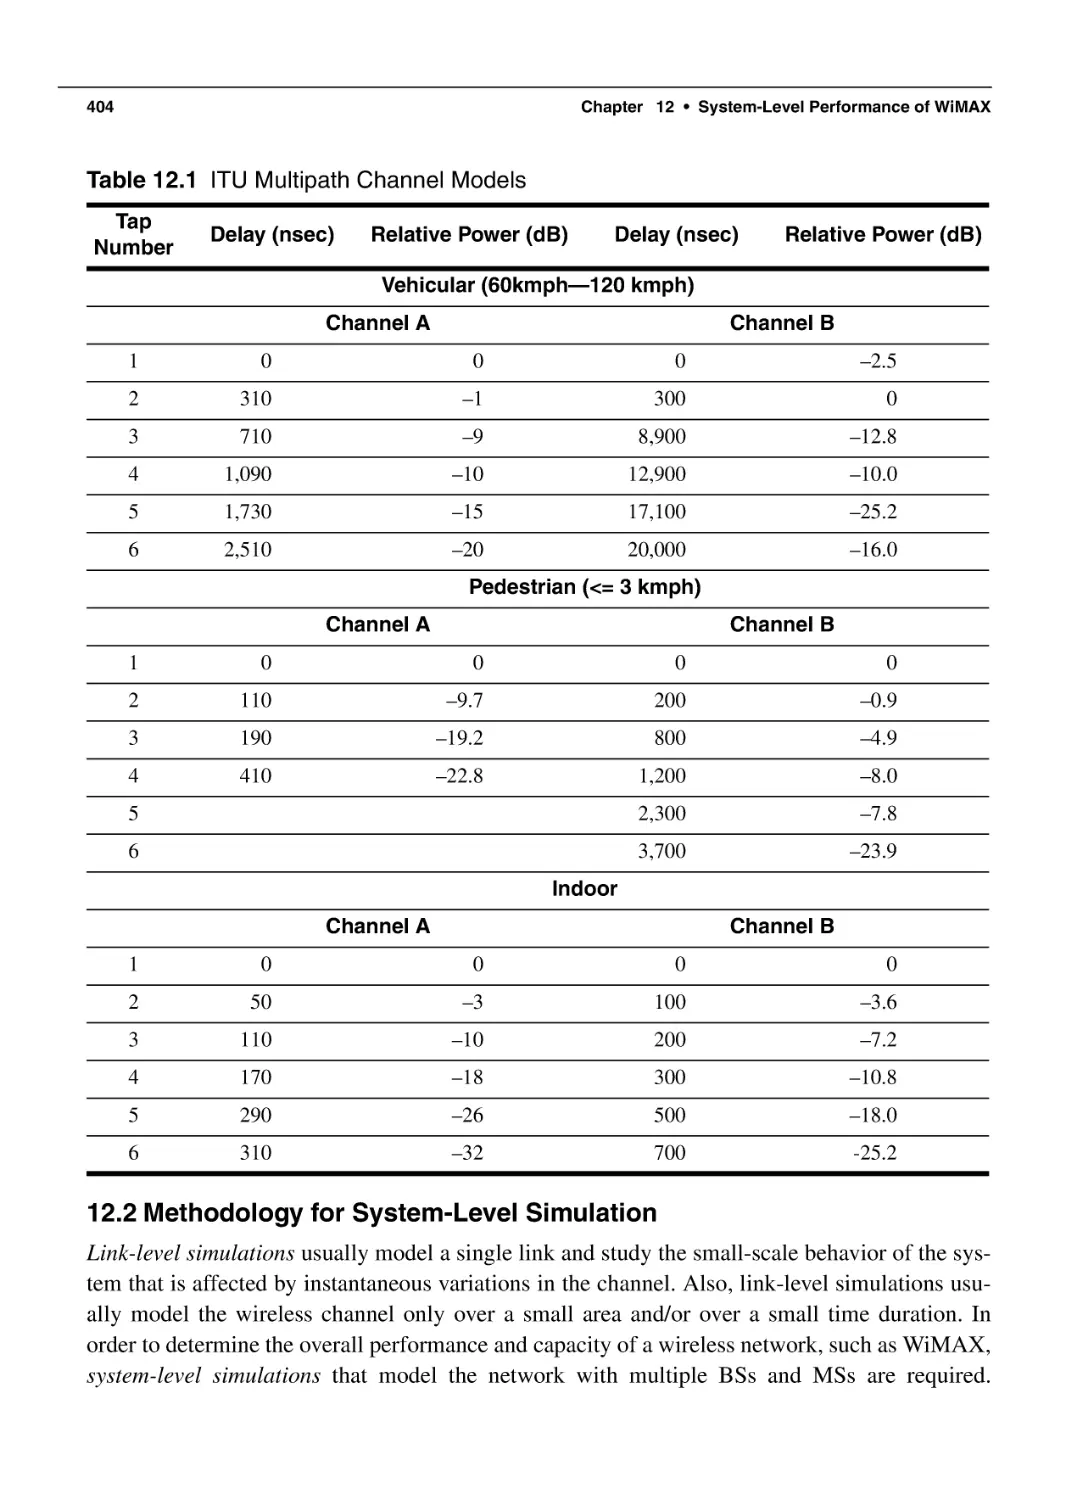 12.2 Methodology for System-Level Simulation